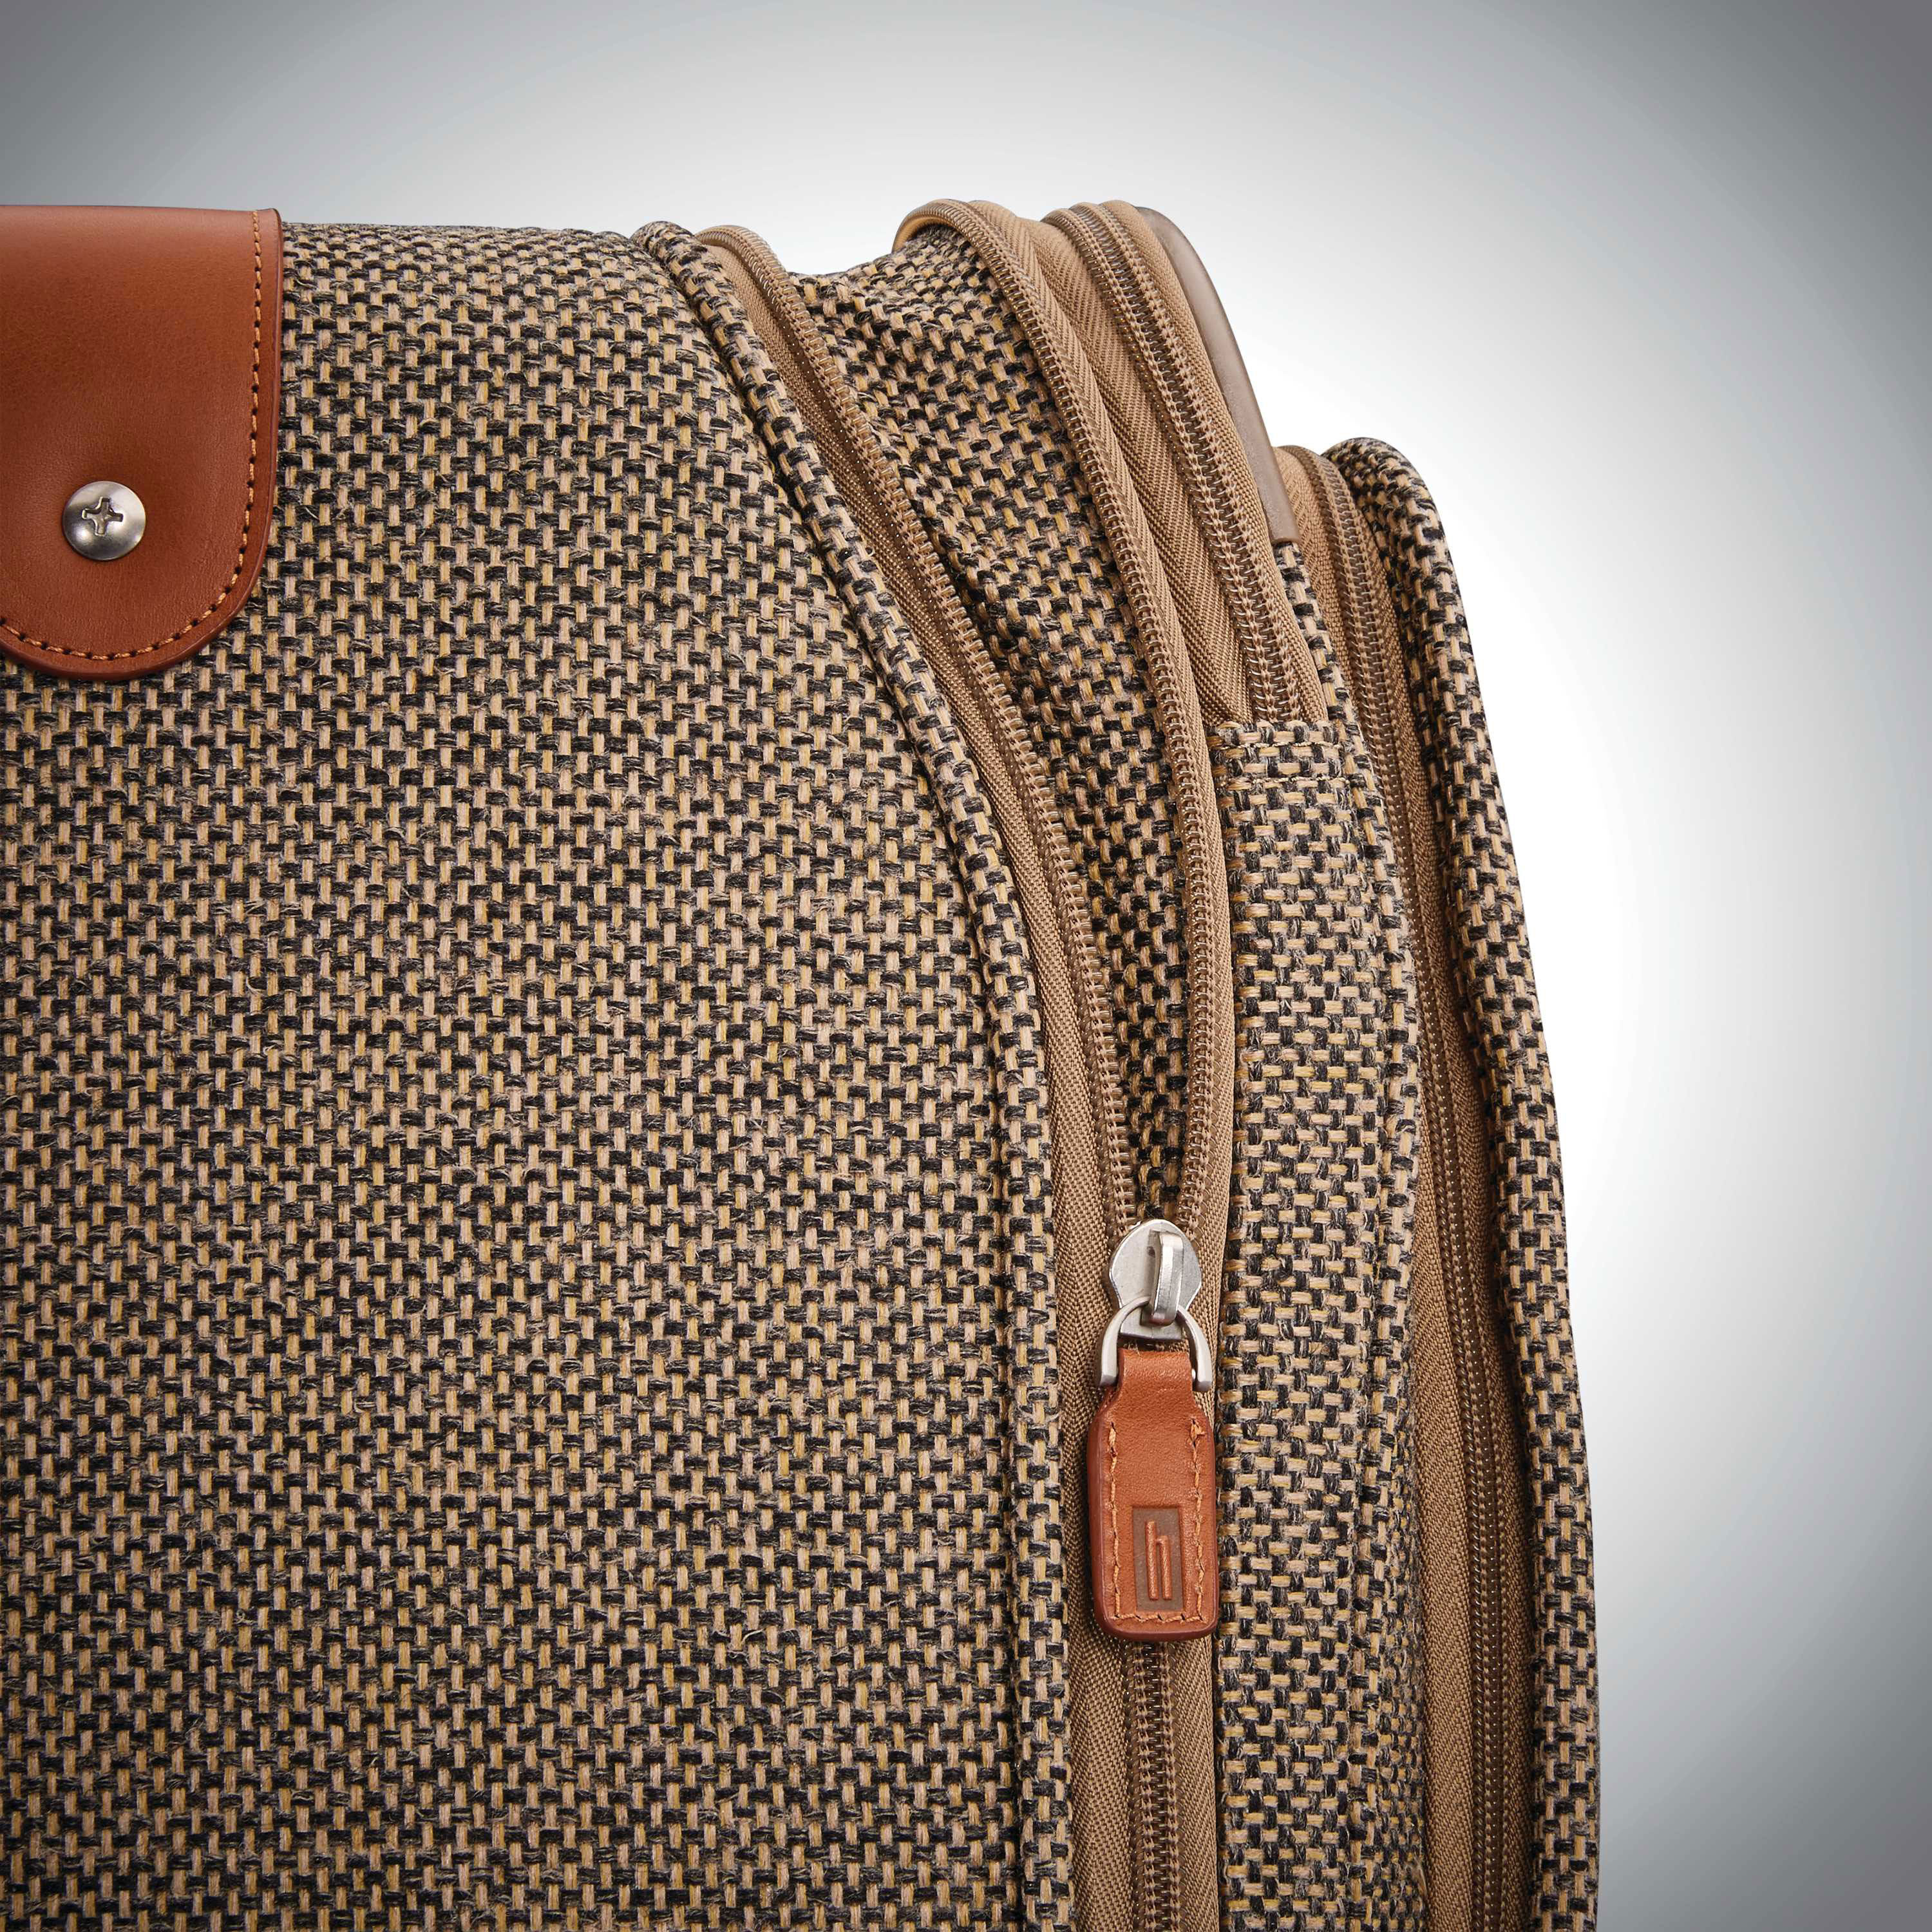 Customized Louis Vuitton Speedy 35 Legendary Love handbag in